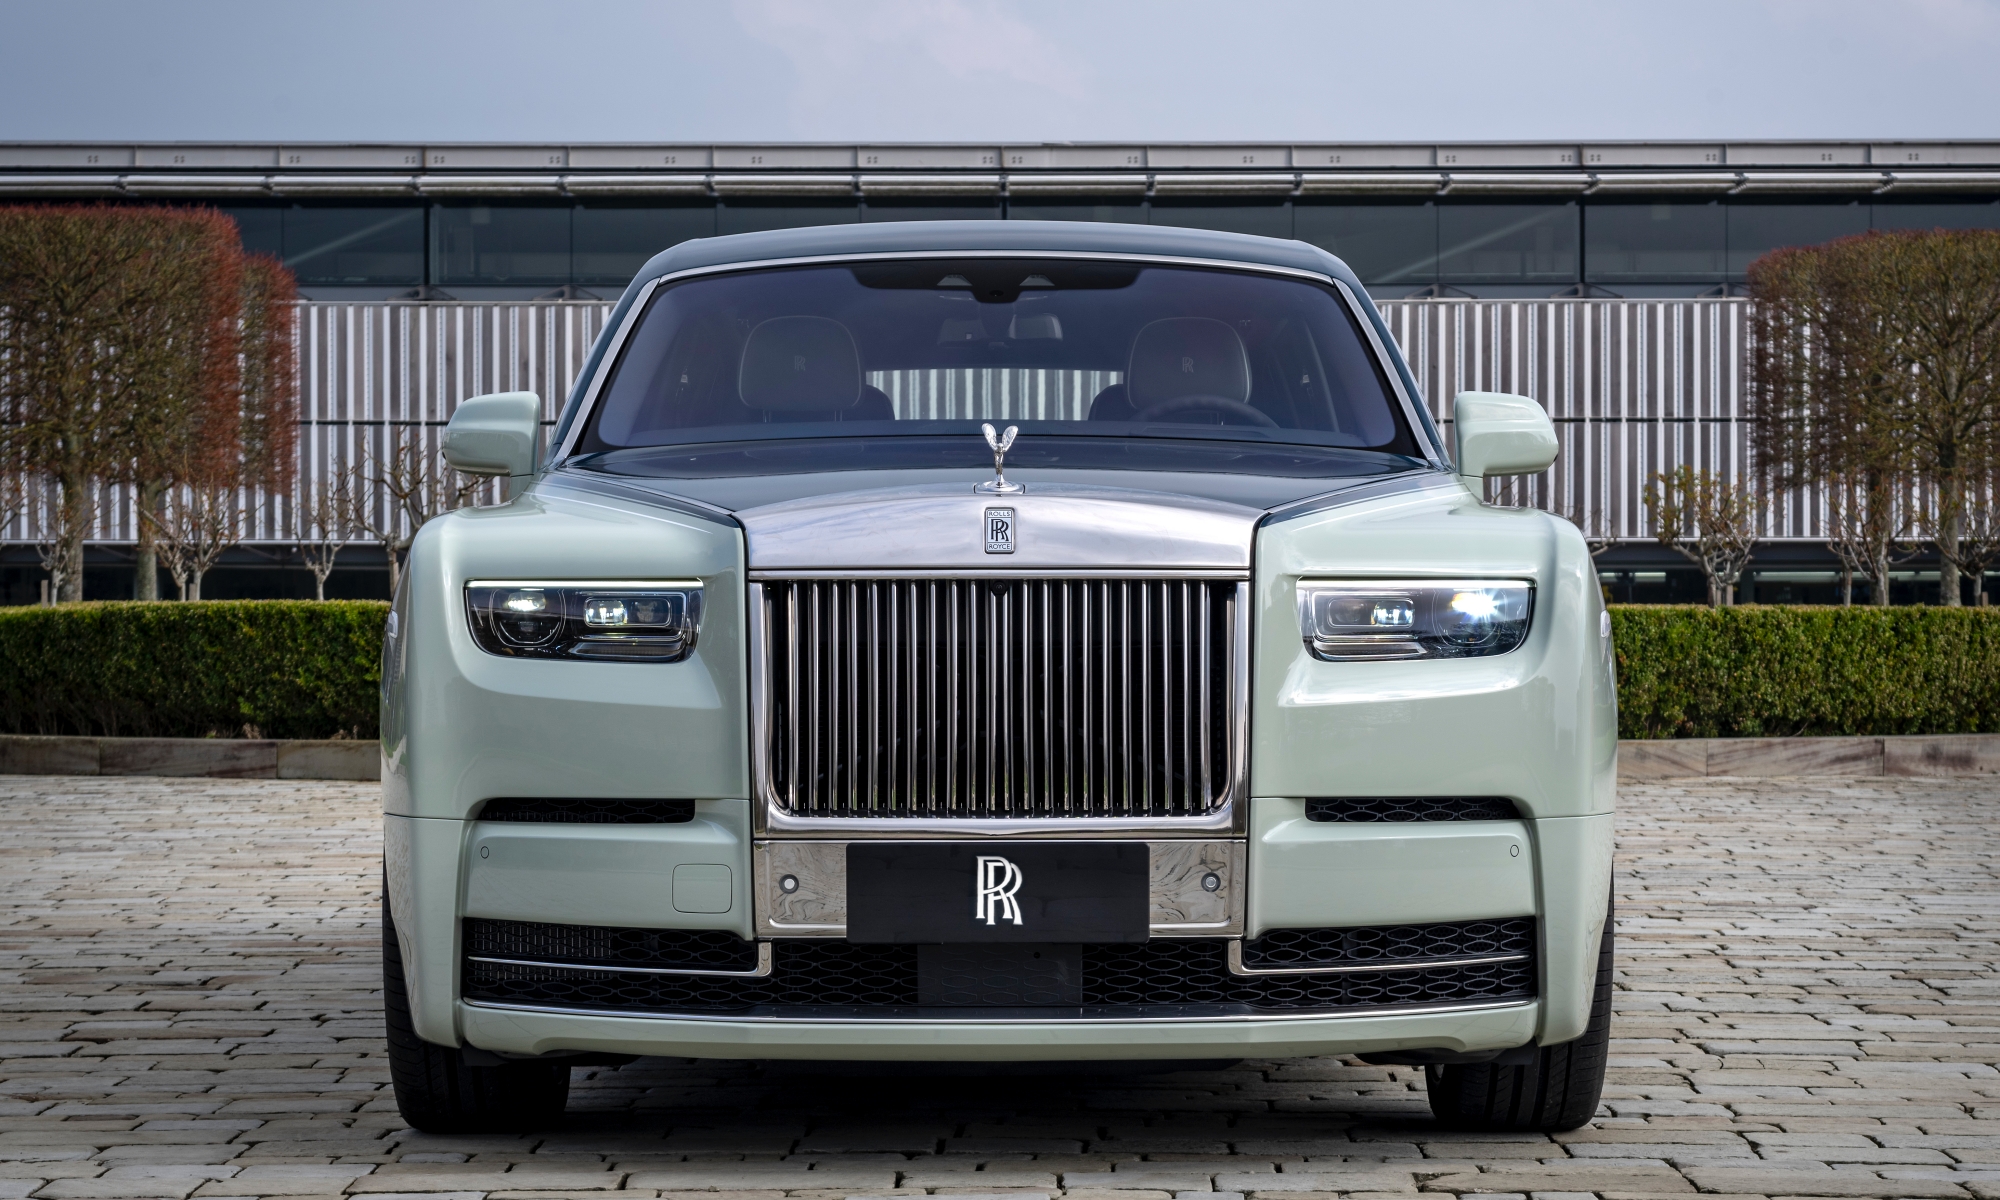 Reminiscent of the night beach, the Rolls-Royce Phantom is beautiful